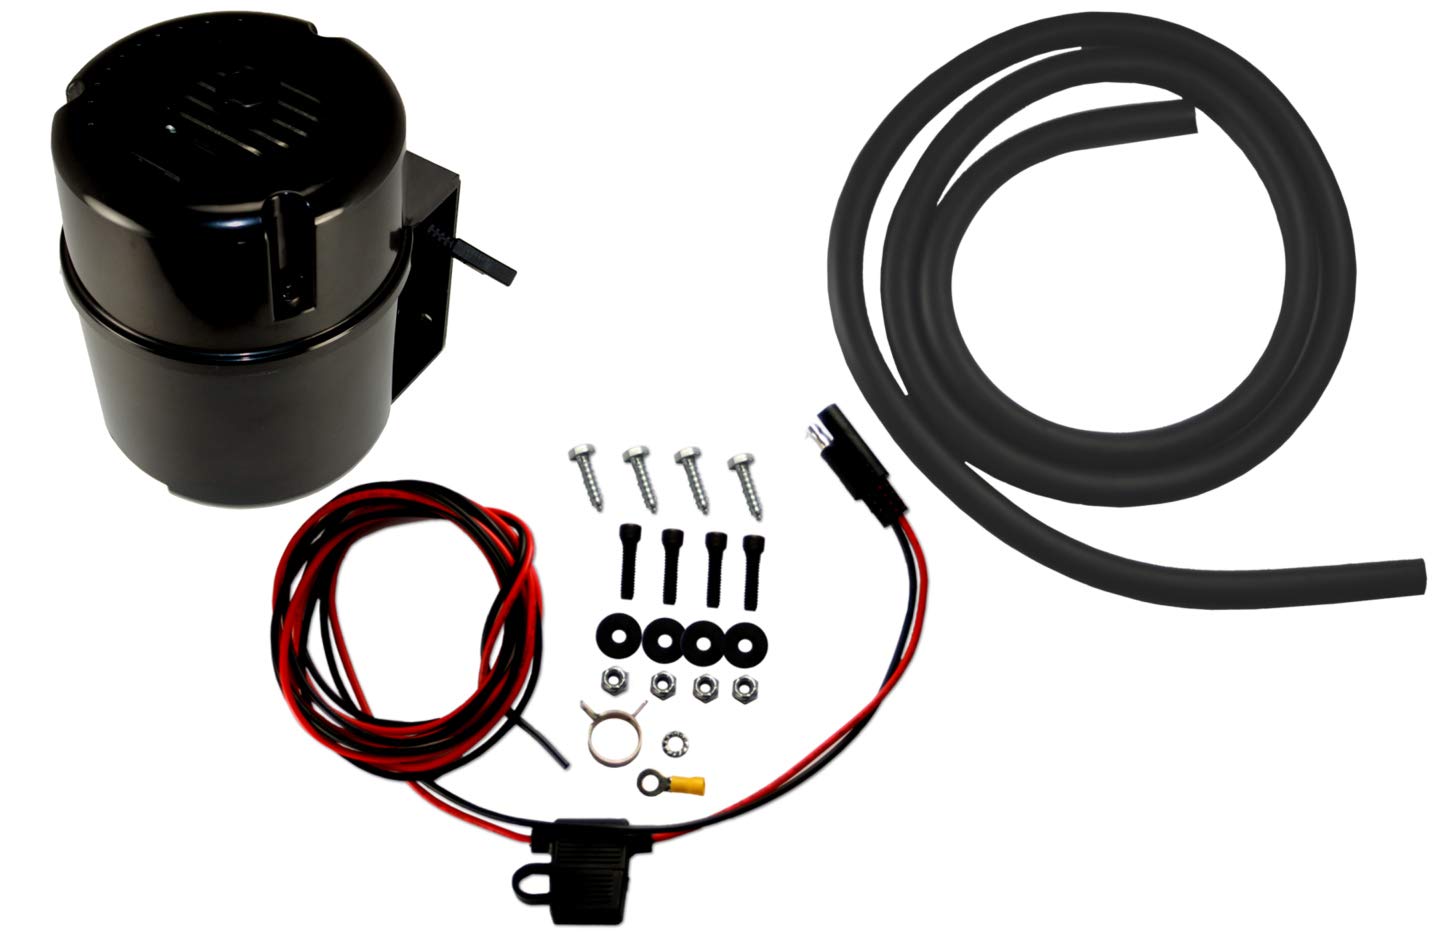 Leed Brakes Elektrische Vakuumpumpe Kit – Black Bandit Series (VP001B) von Leed Brakes